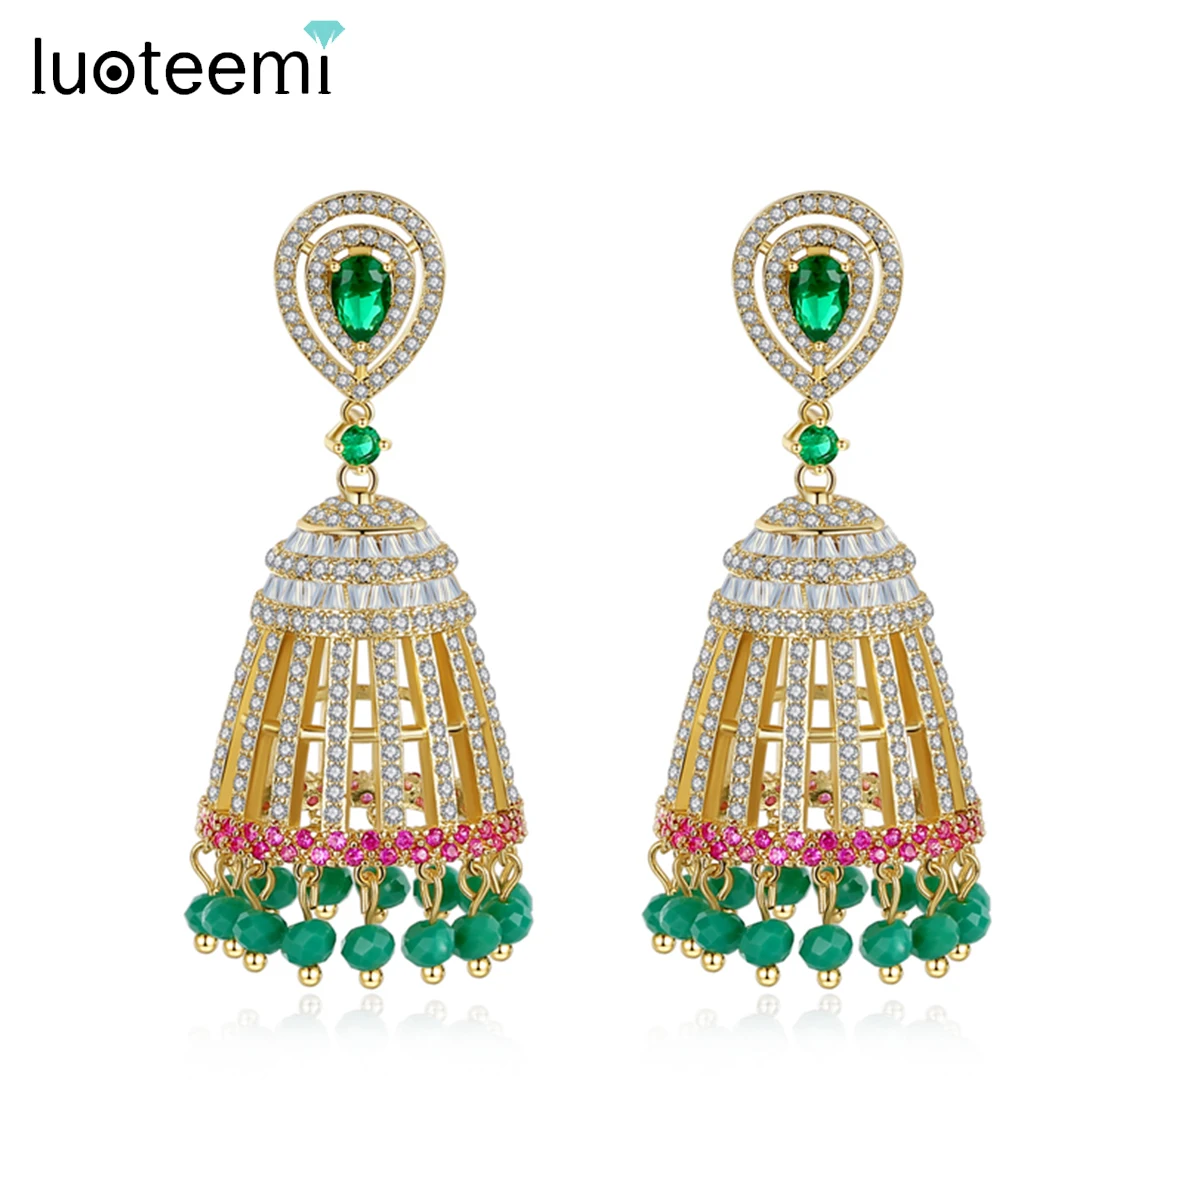 

LUOTEEMI Ethnic Style Big Dangle Drop Earrings Colorful AAA CZ Inlaid Green Beads Tassle Bridal Indian Fashion Jewelry Brincos